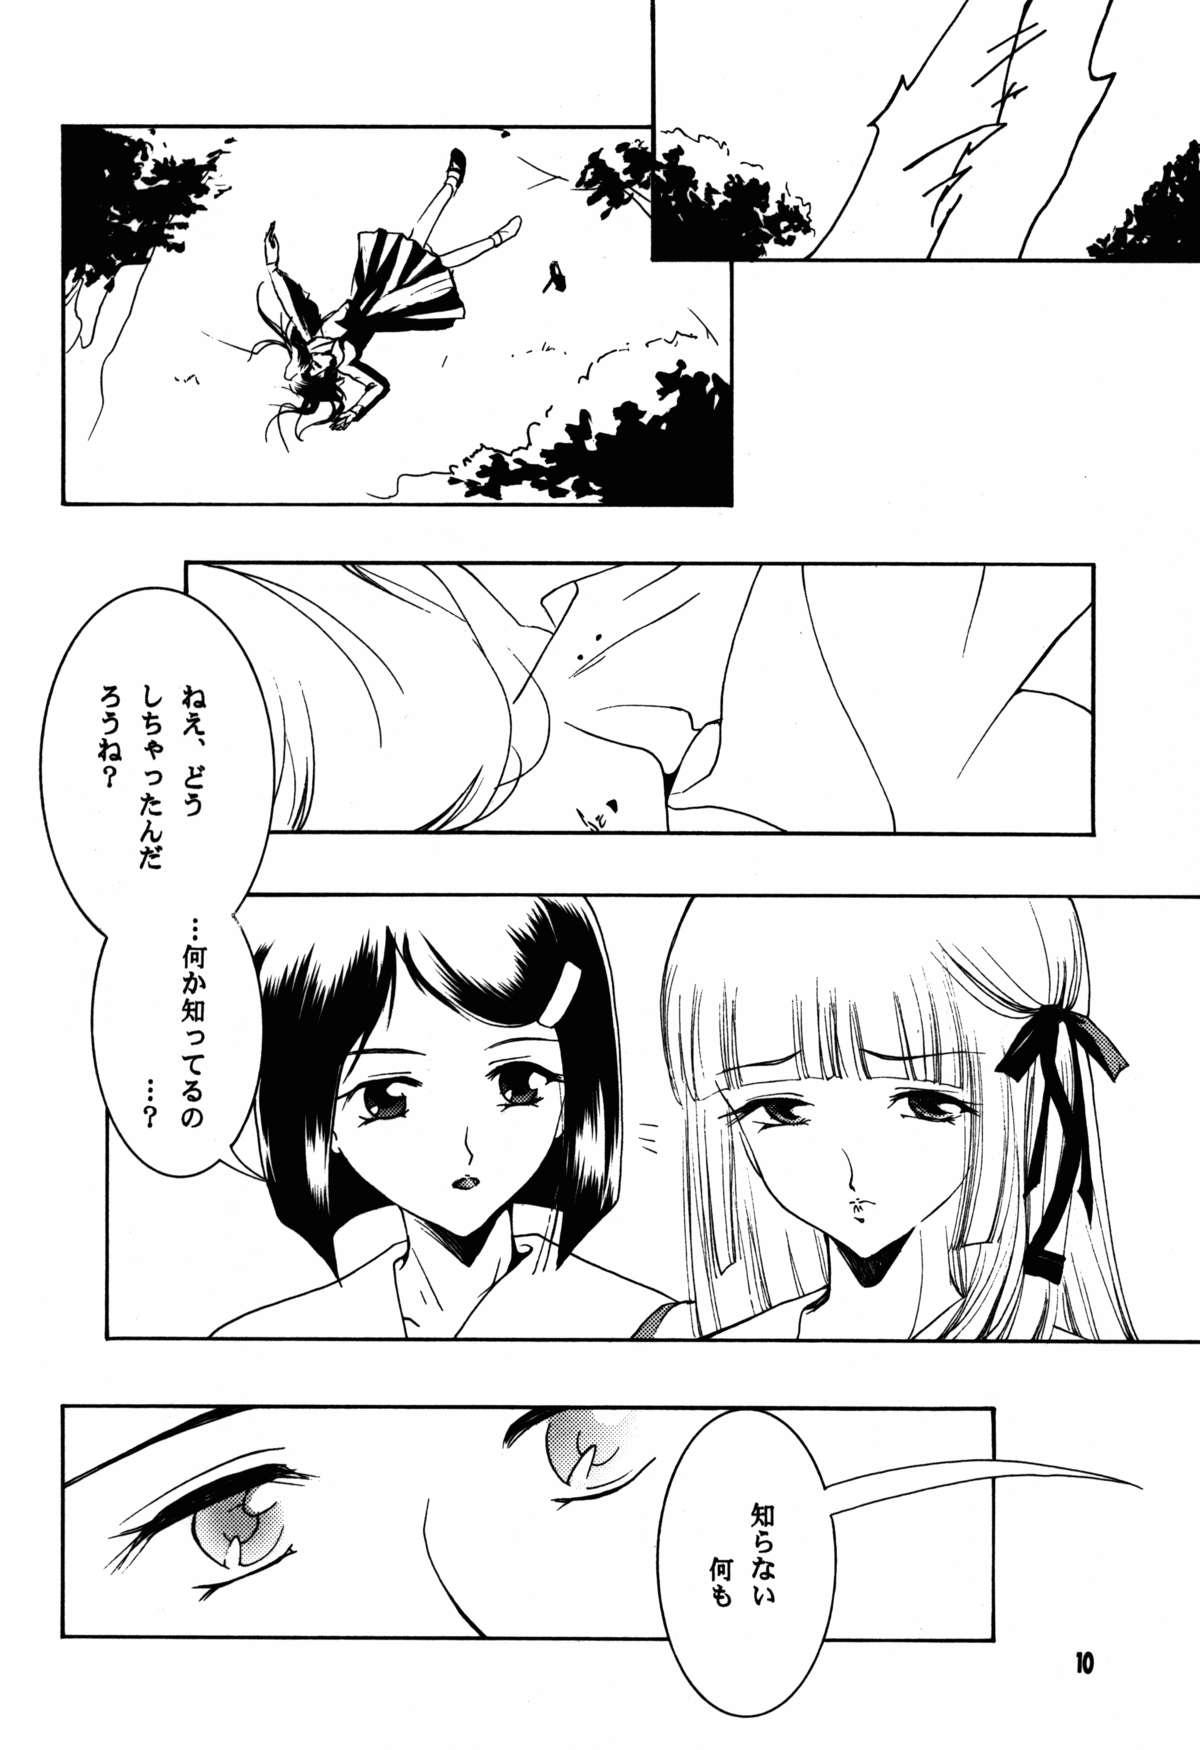 Huge Hadashi no VAMPIRE 17 - Vampire princess miyu Ink - Page 10